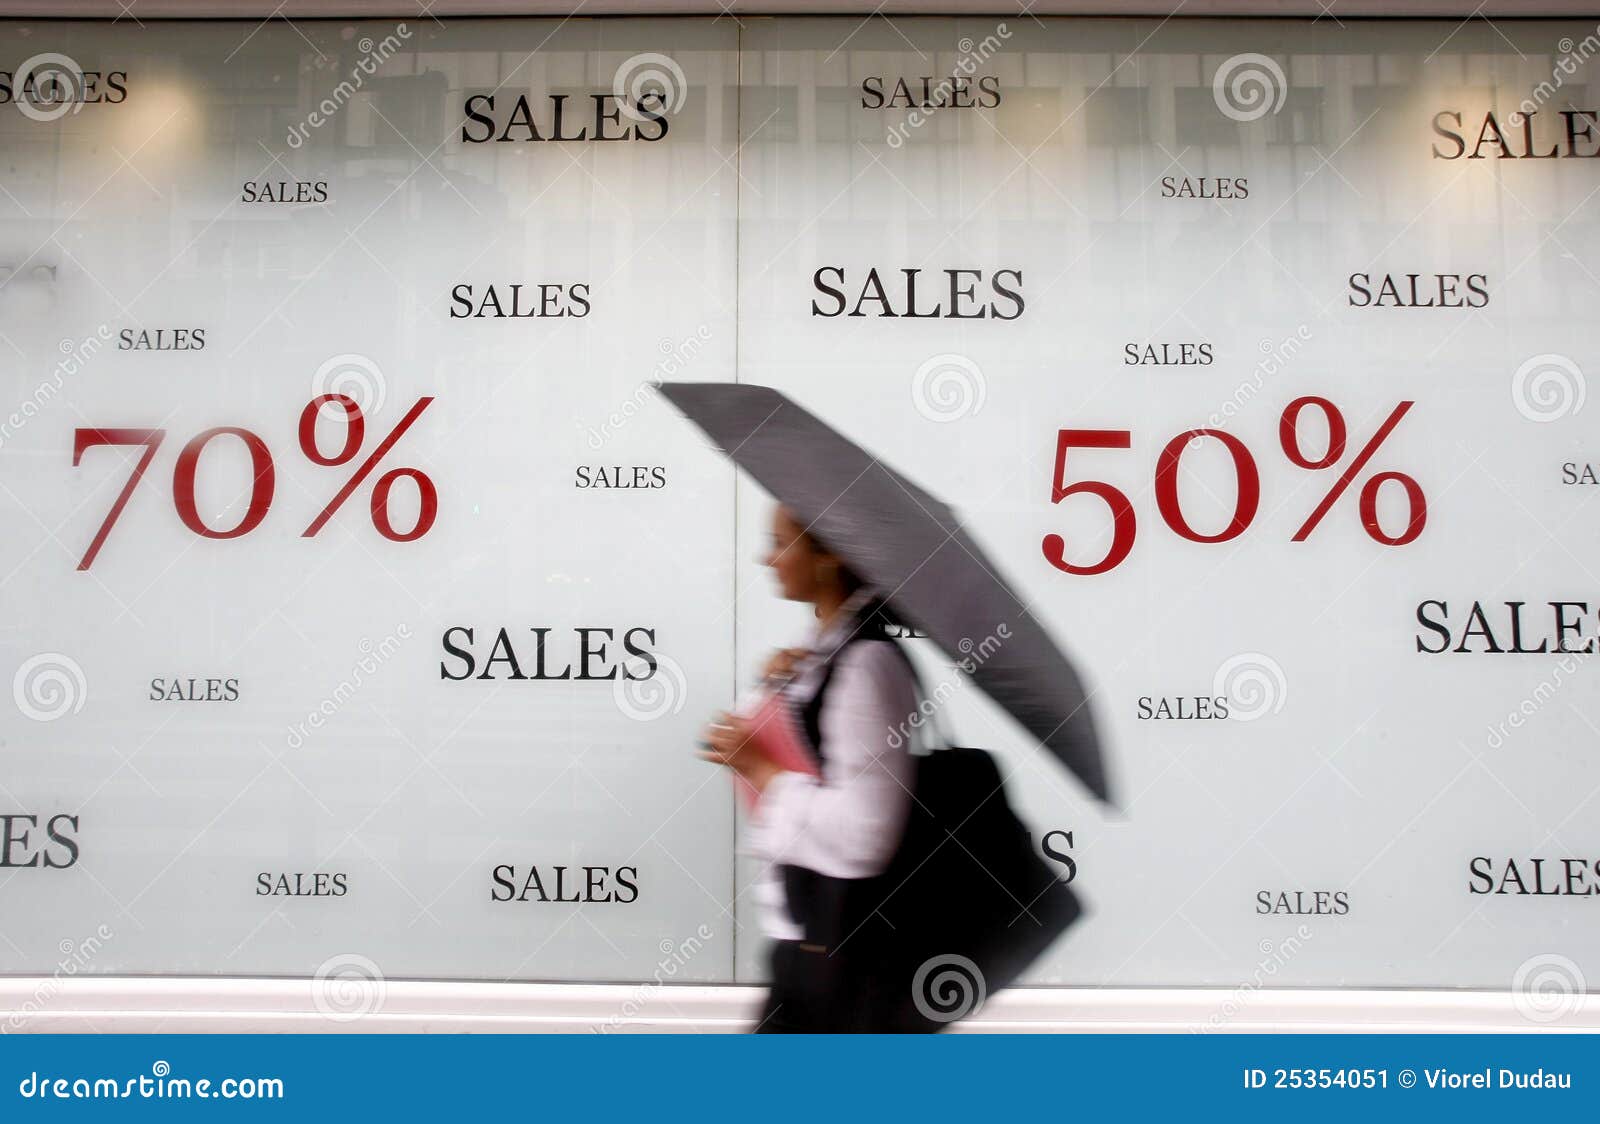 store advertising sales